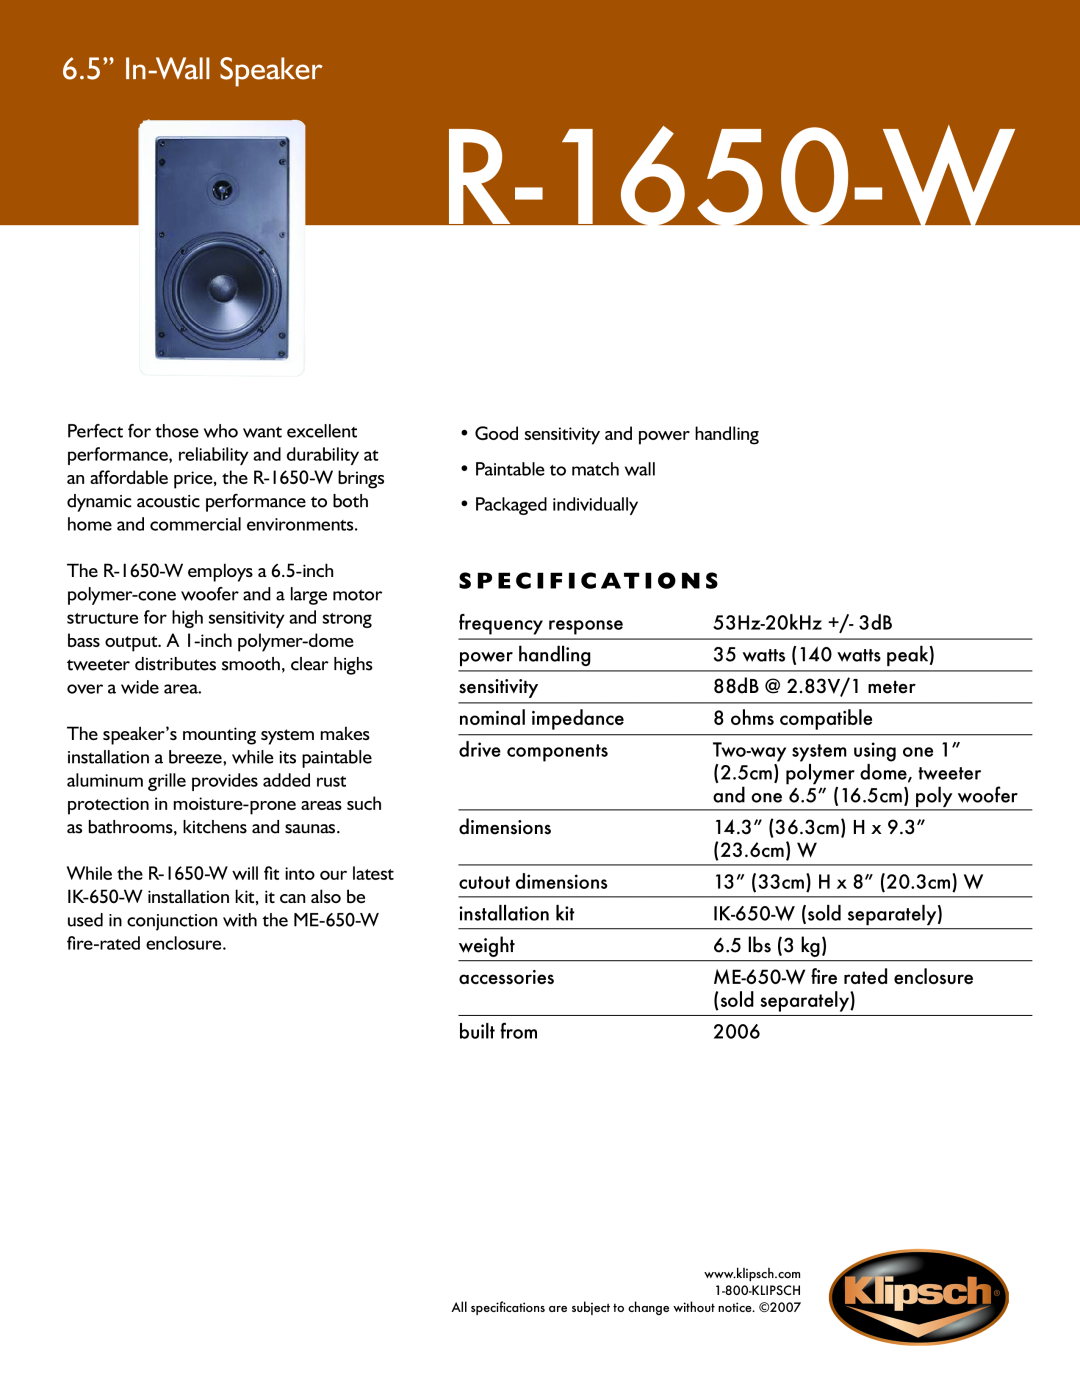 Klipsch R-1650-W specifications 6.5” In-WallSpeaker, S p e c i f i c a t i o n s 